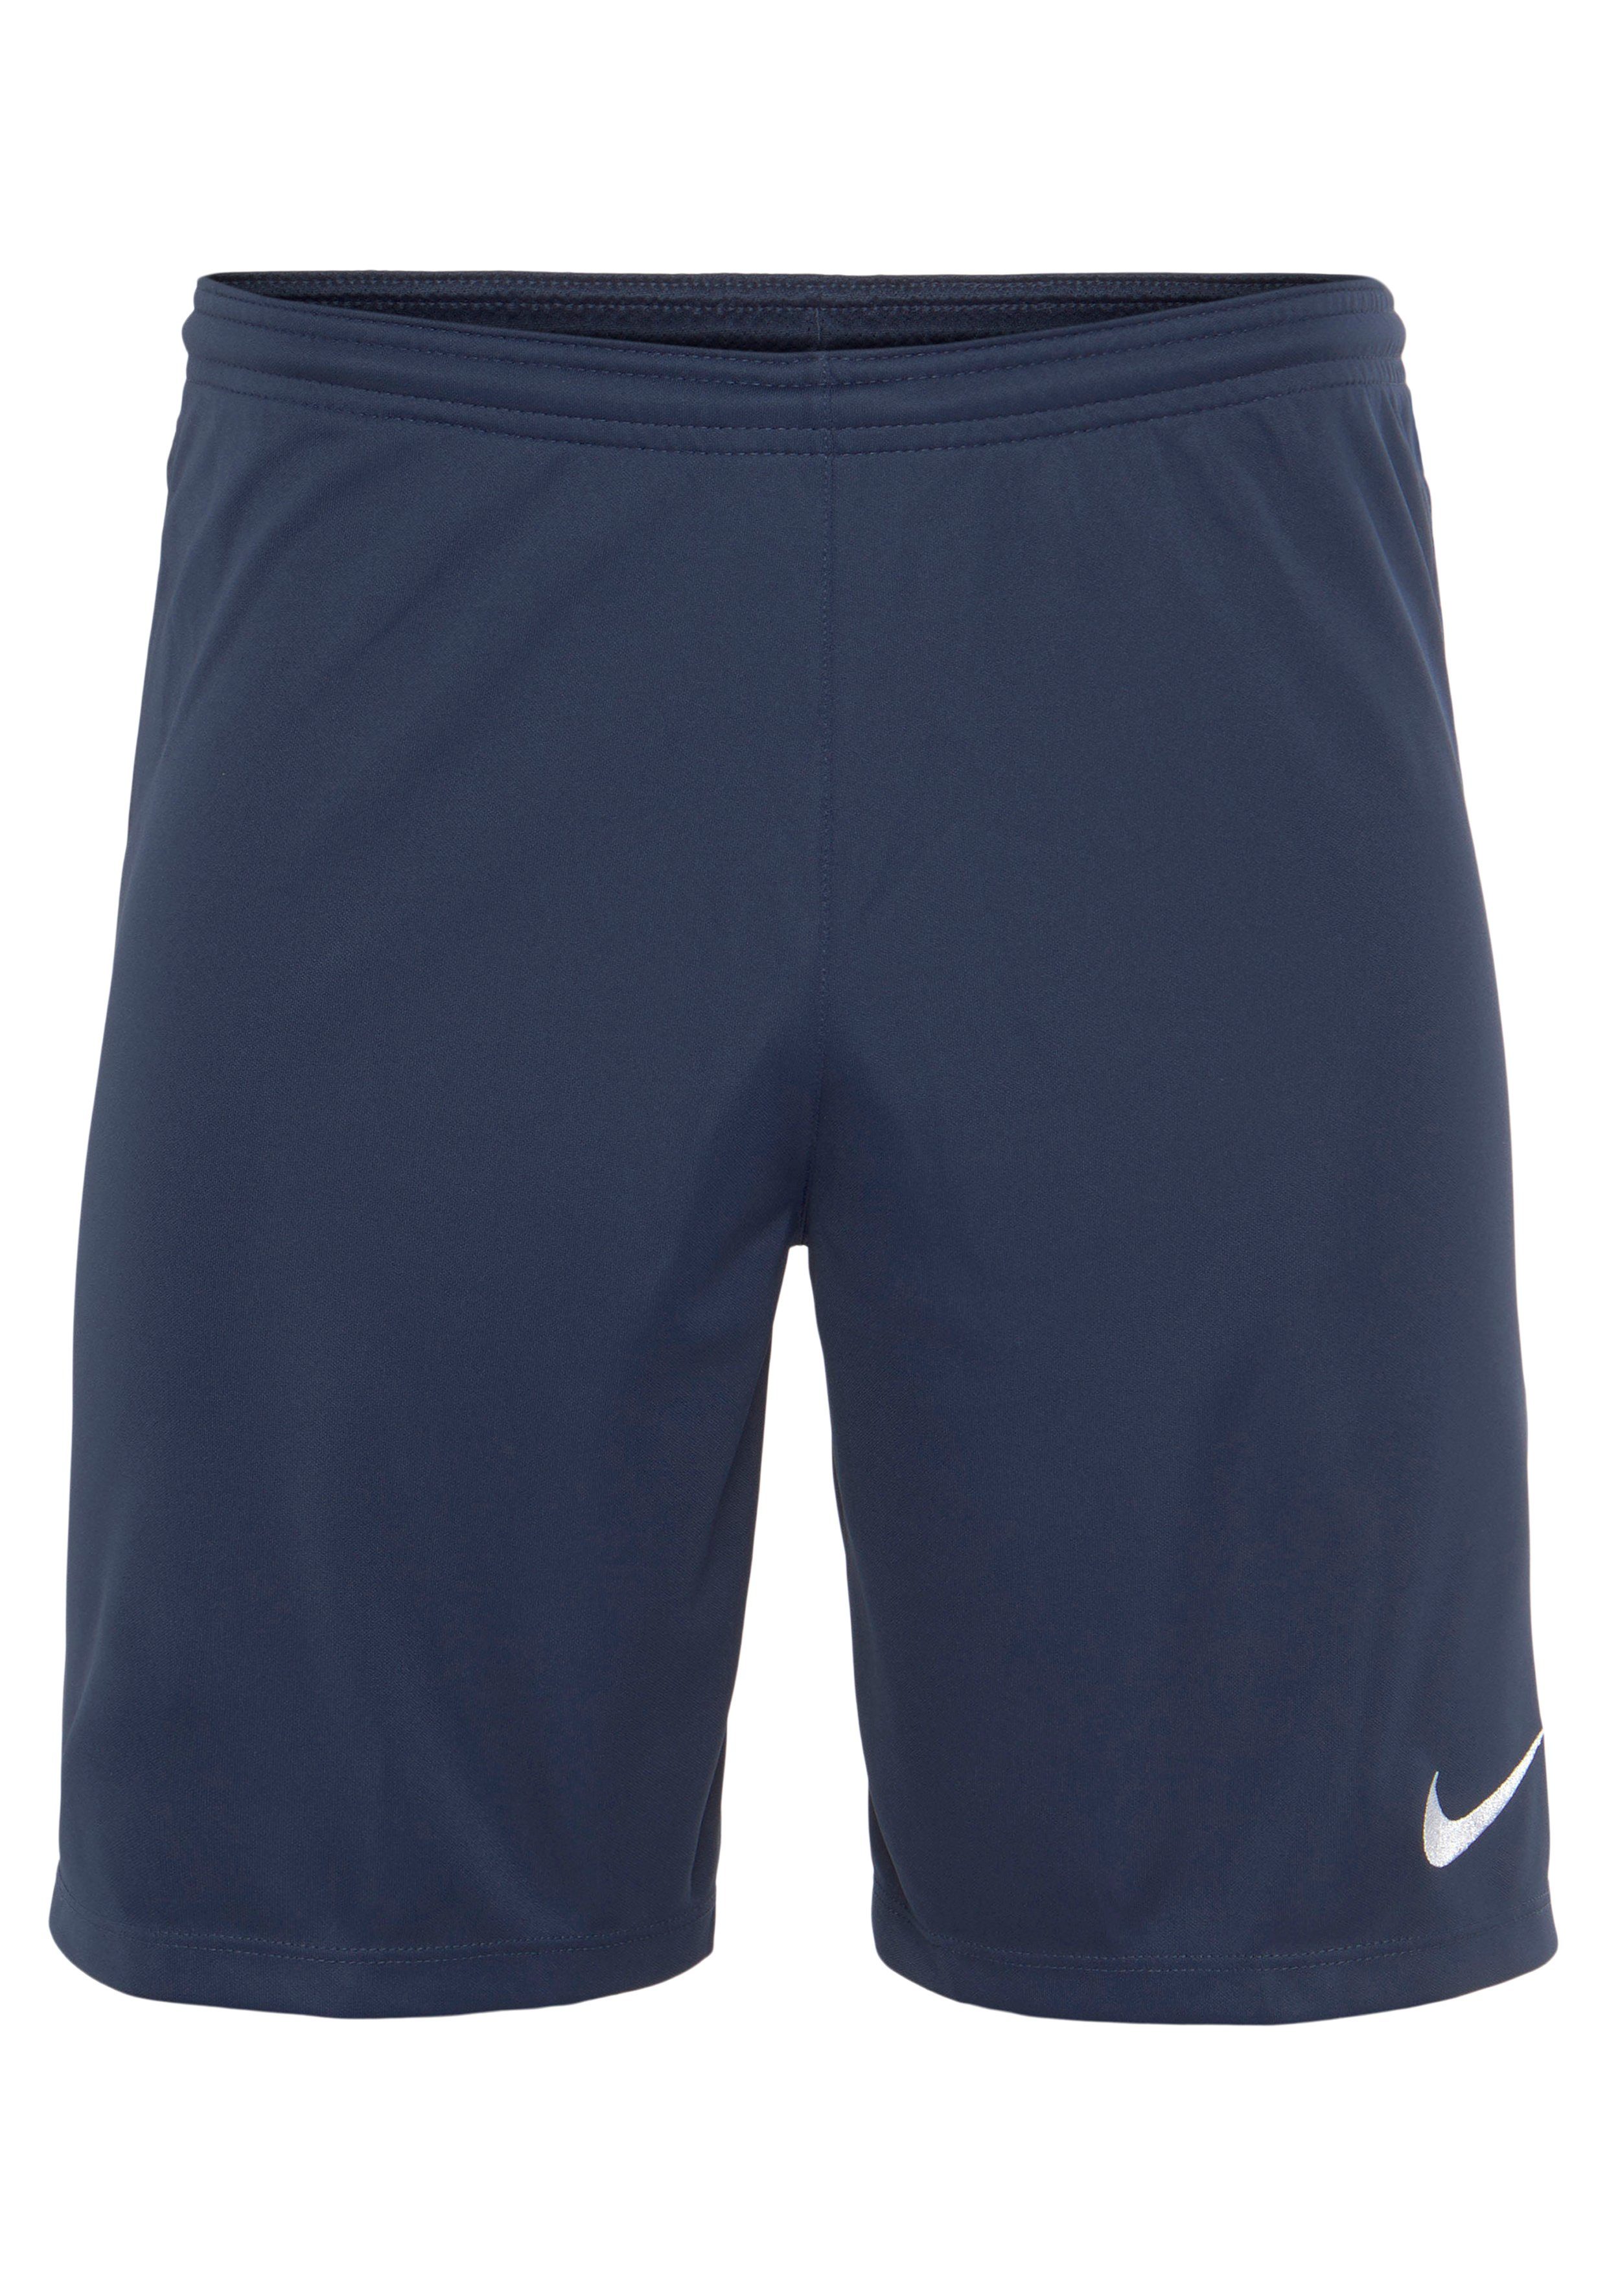 Nike Shorts Nike Short League Knit navy